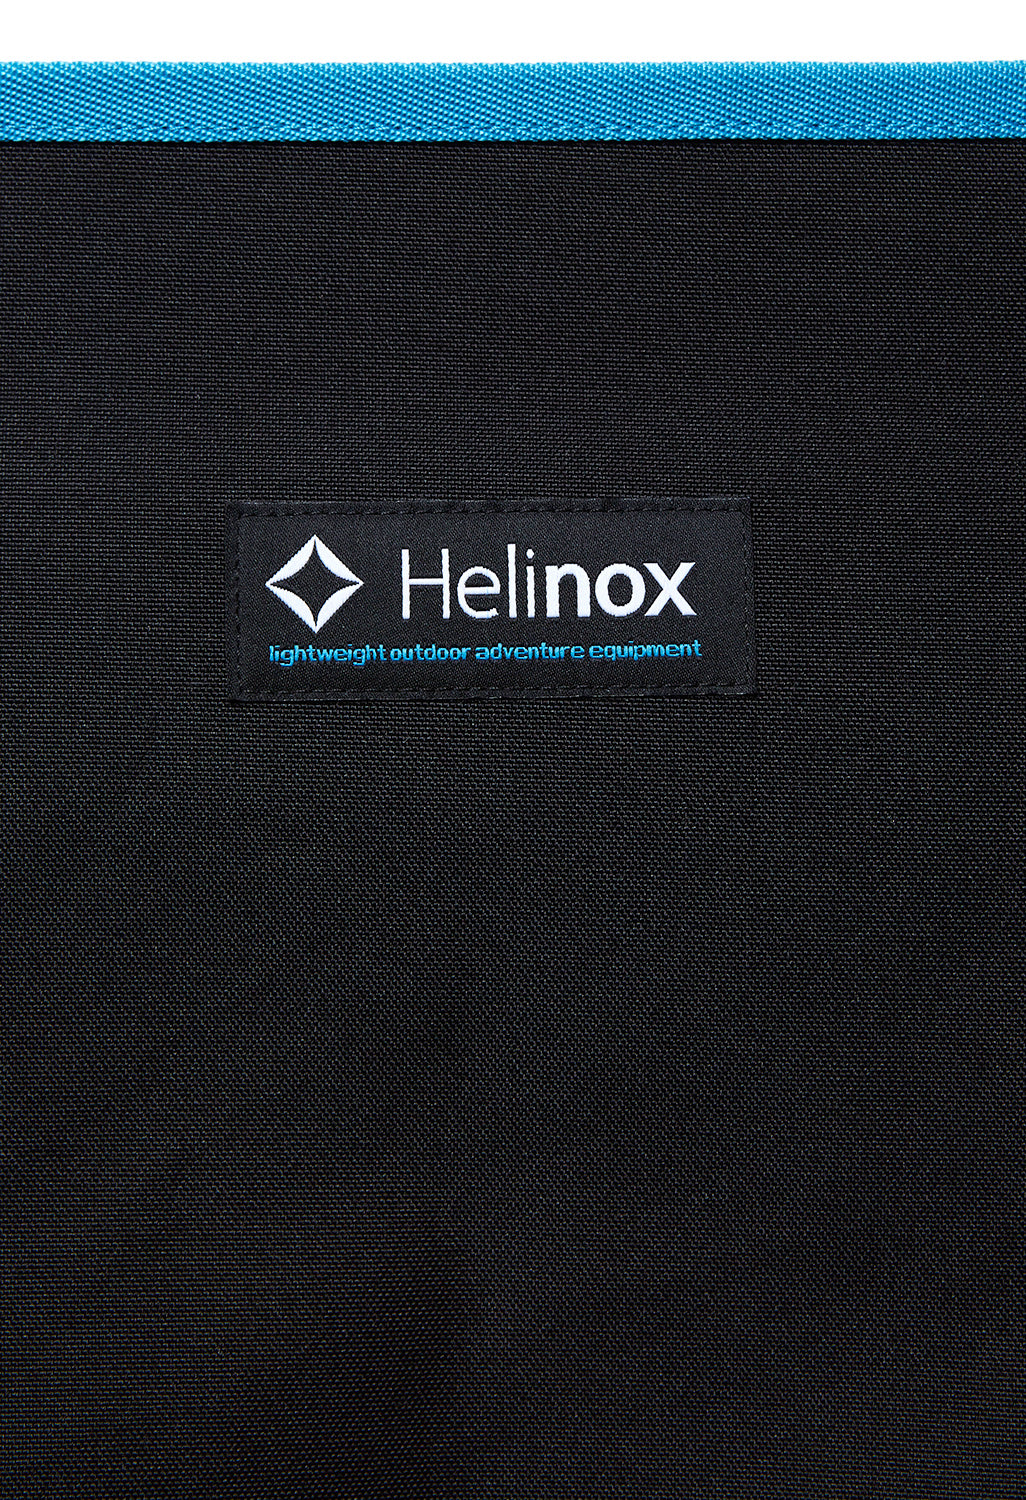 Helinox Incline Festival Chair - Black